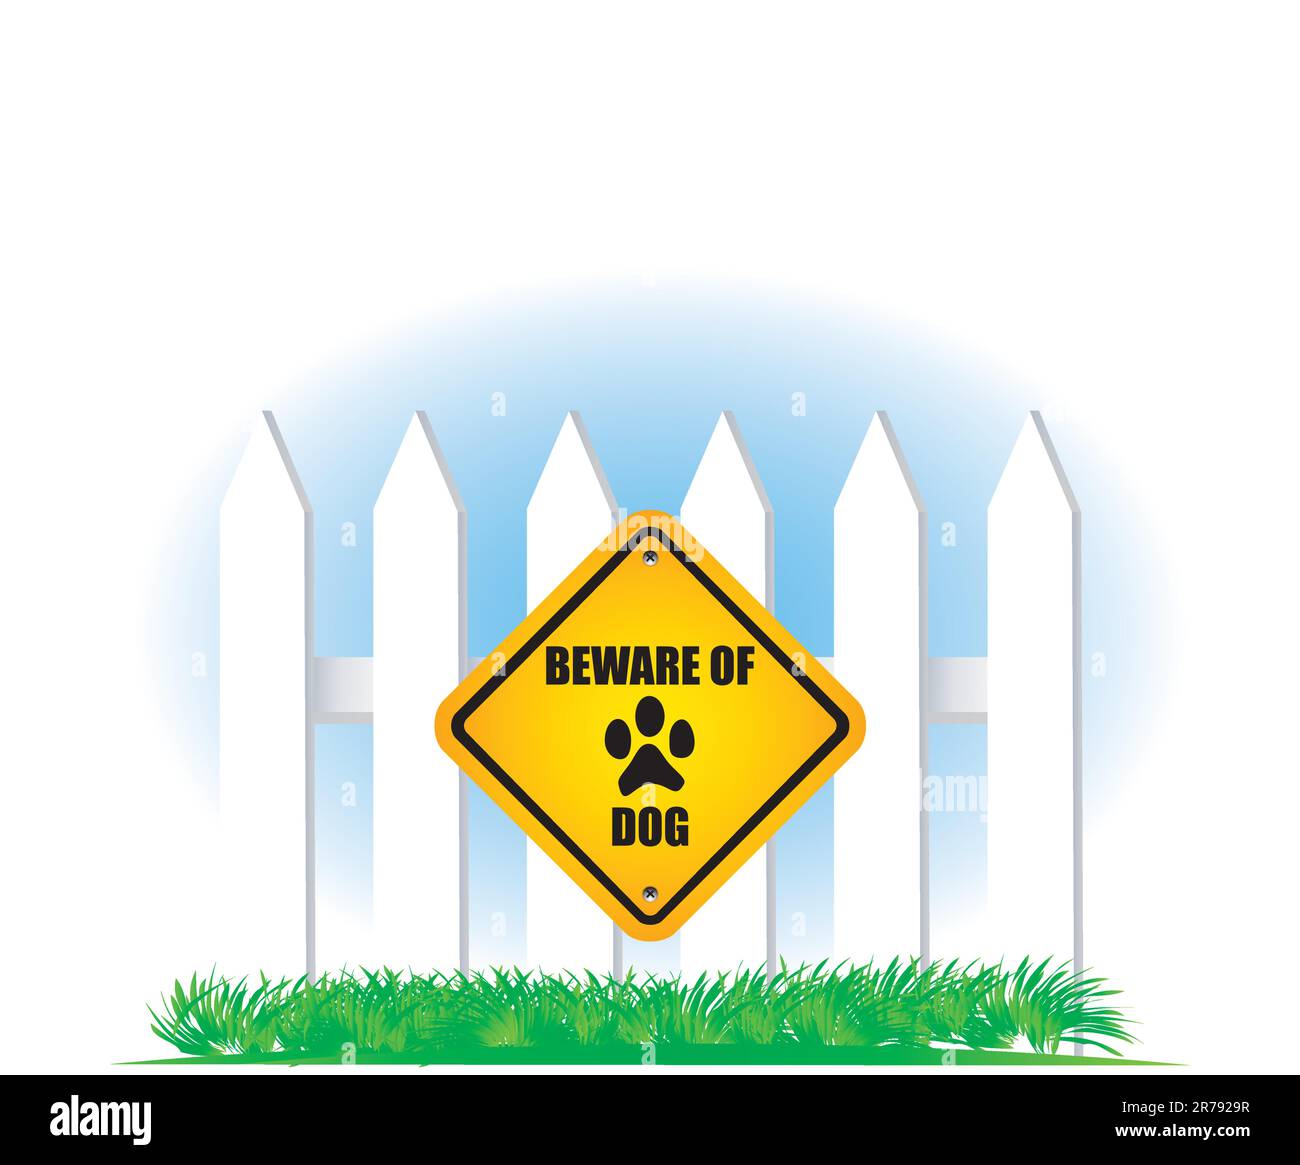 beware of dog yellow sign Stock Vector